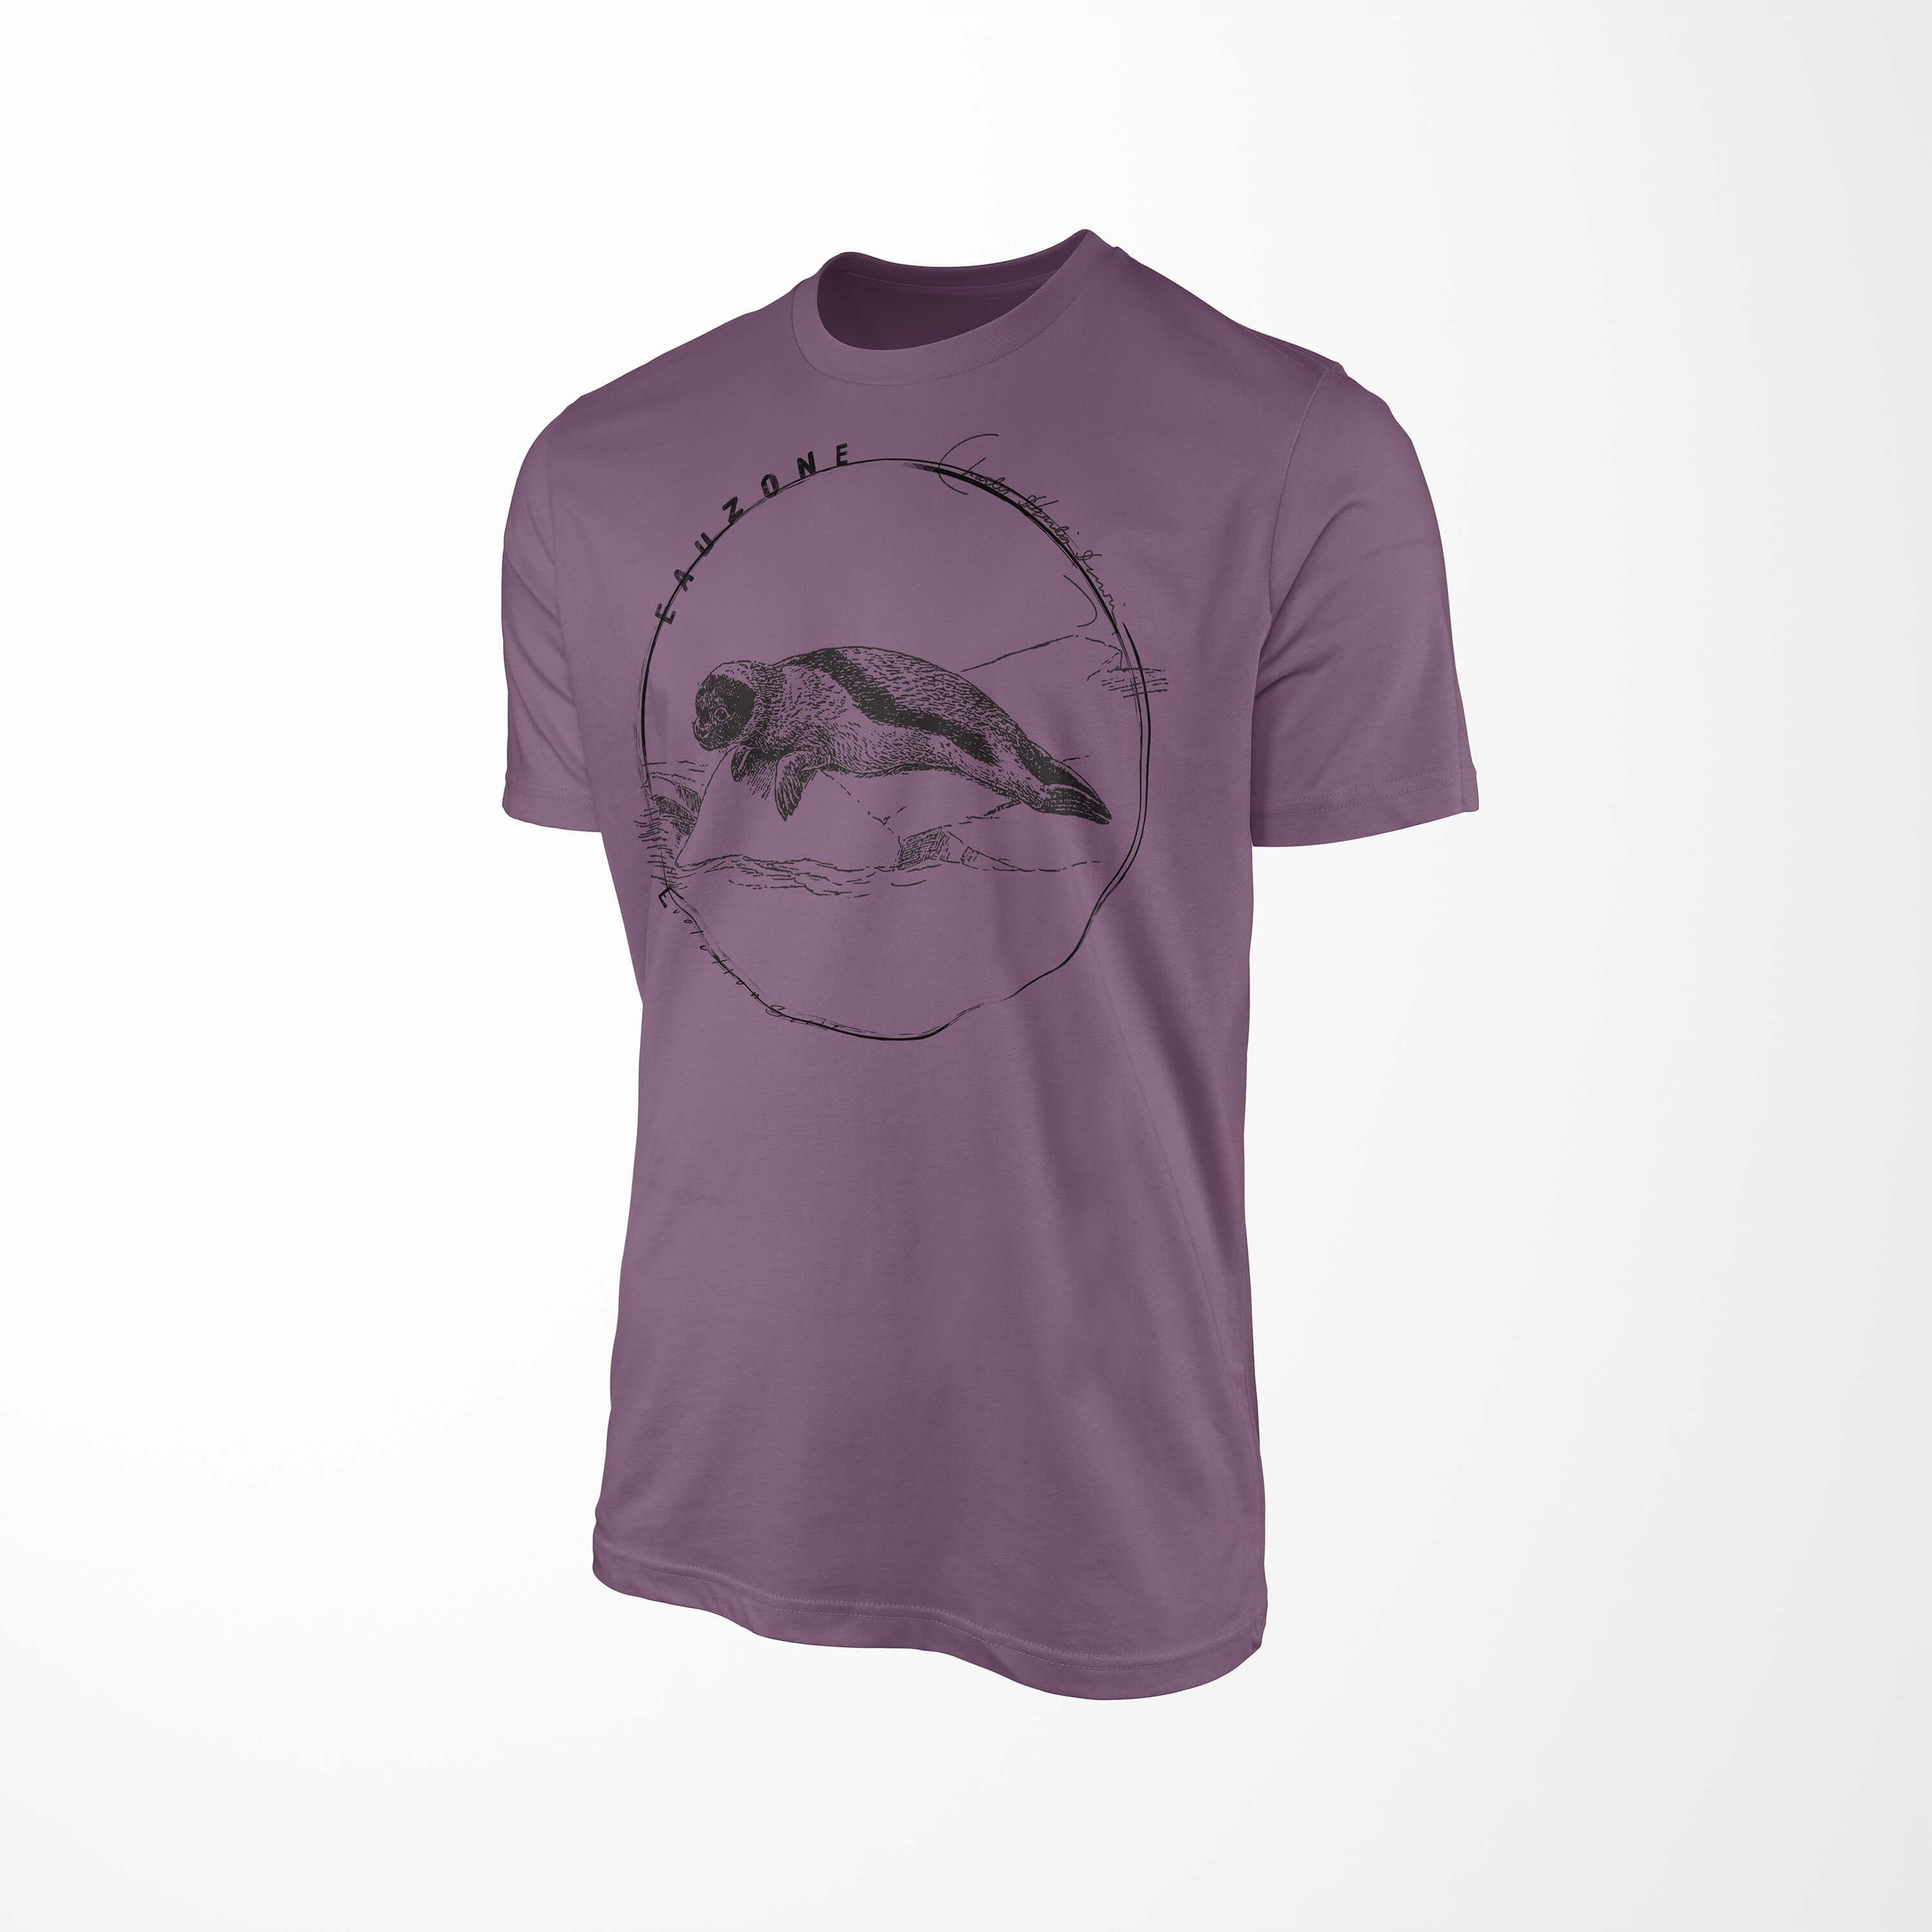 T-Shirt Evolution Robbe Art Shiraz T-Shirt Herren Sinus